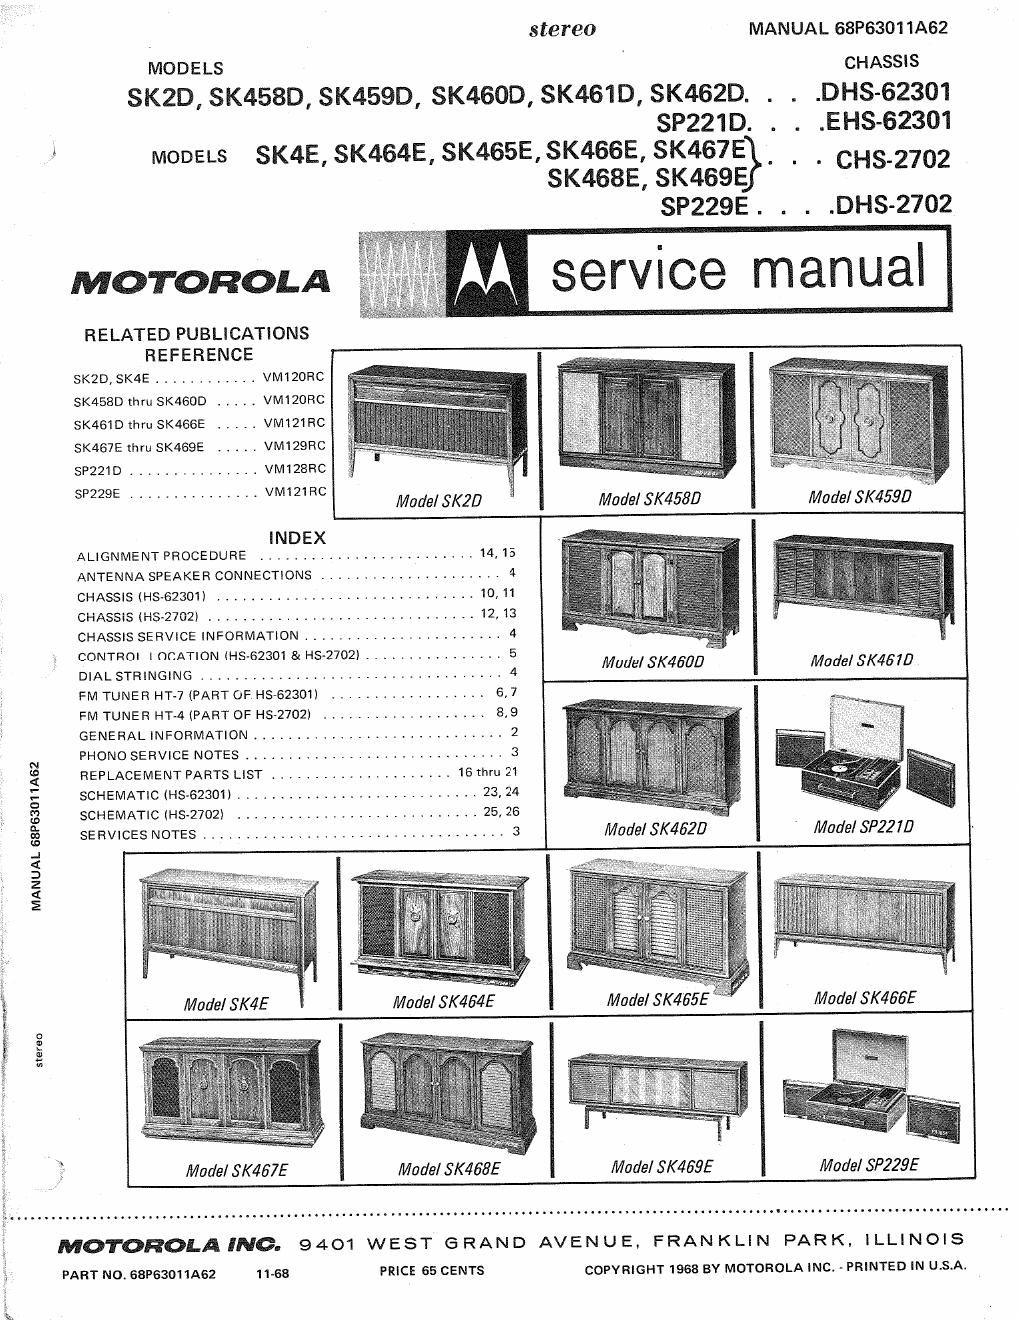 motorola sk 466 e service manual